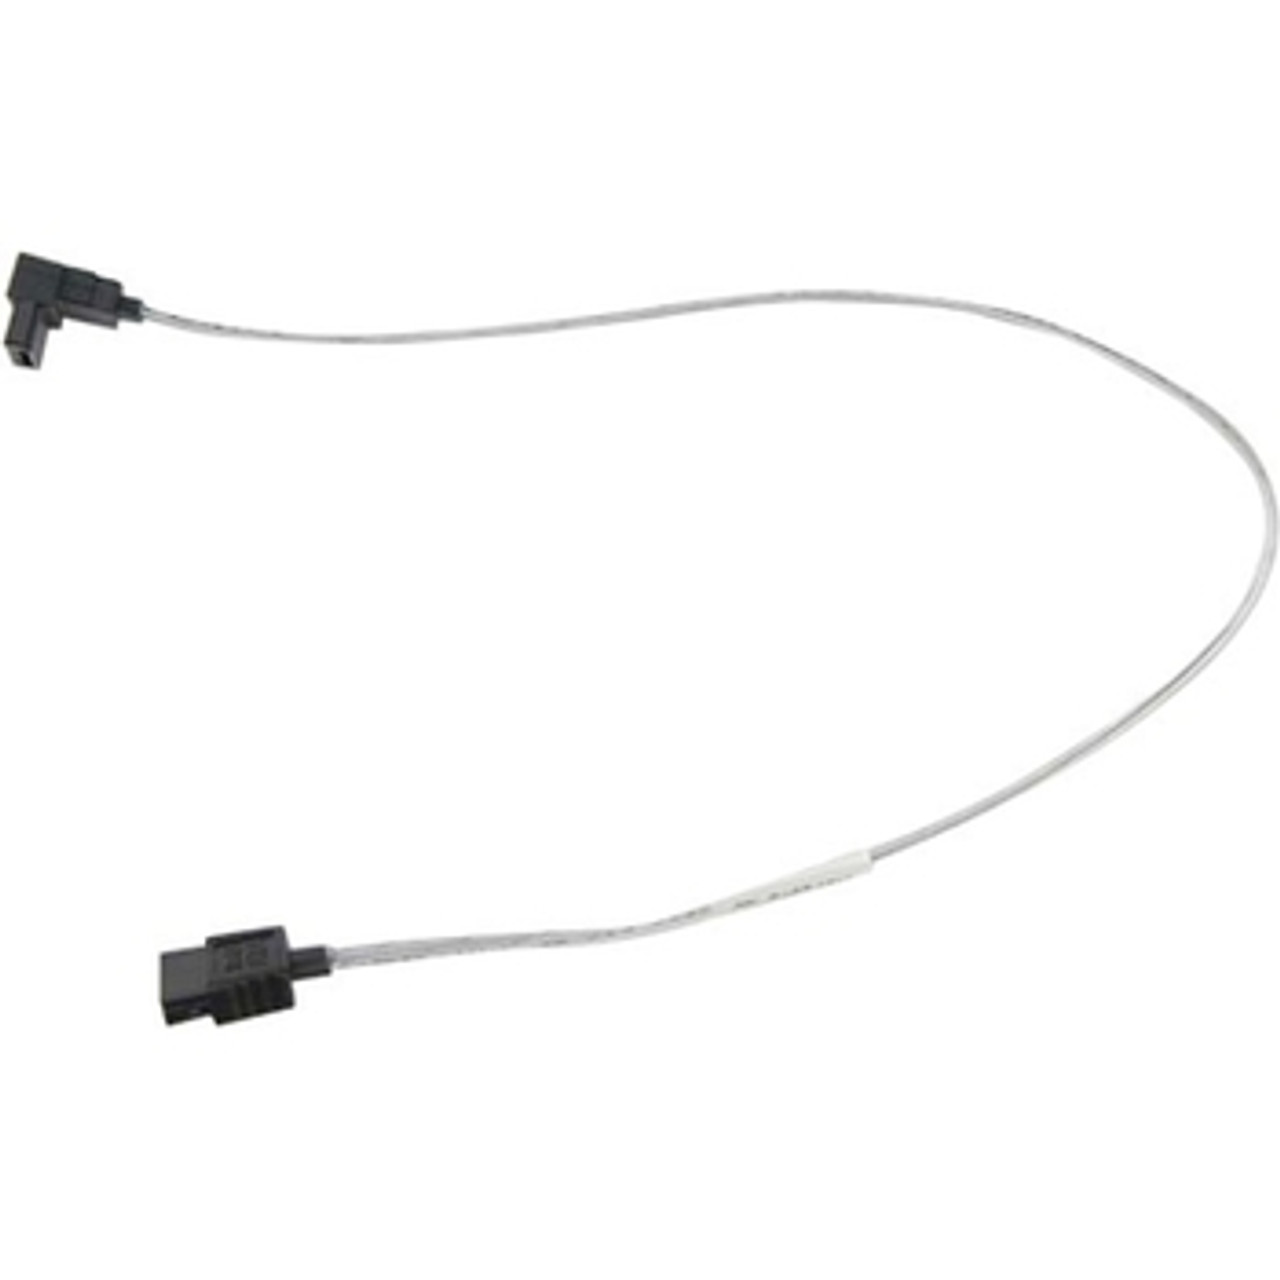 CBL-SAST-0538 Supermicro SATA Data Transfer Cable